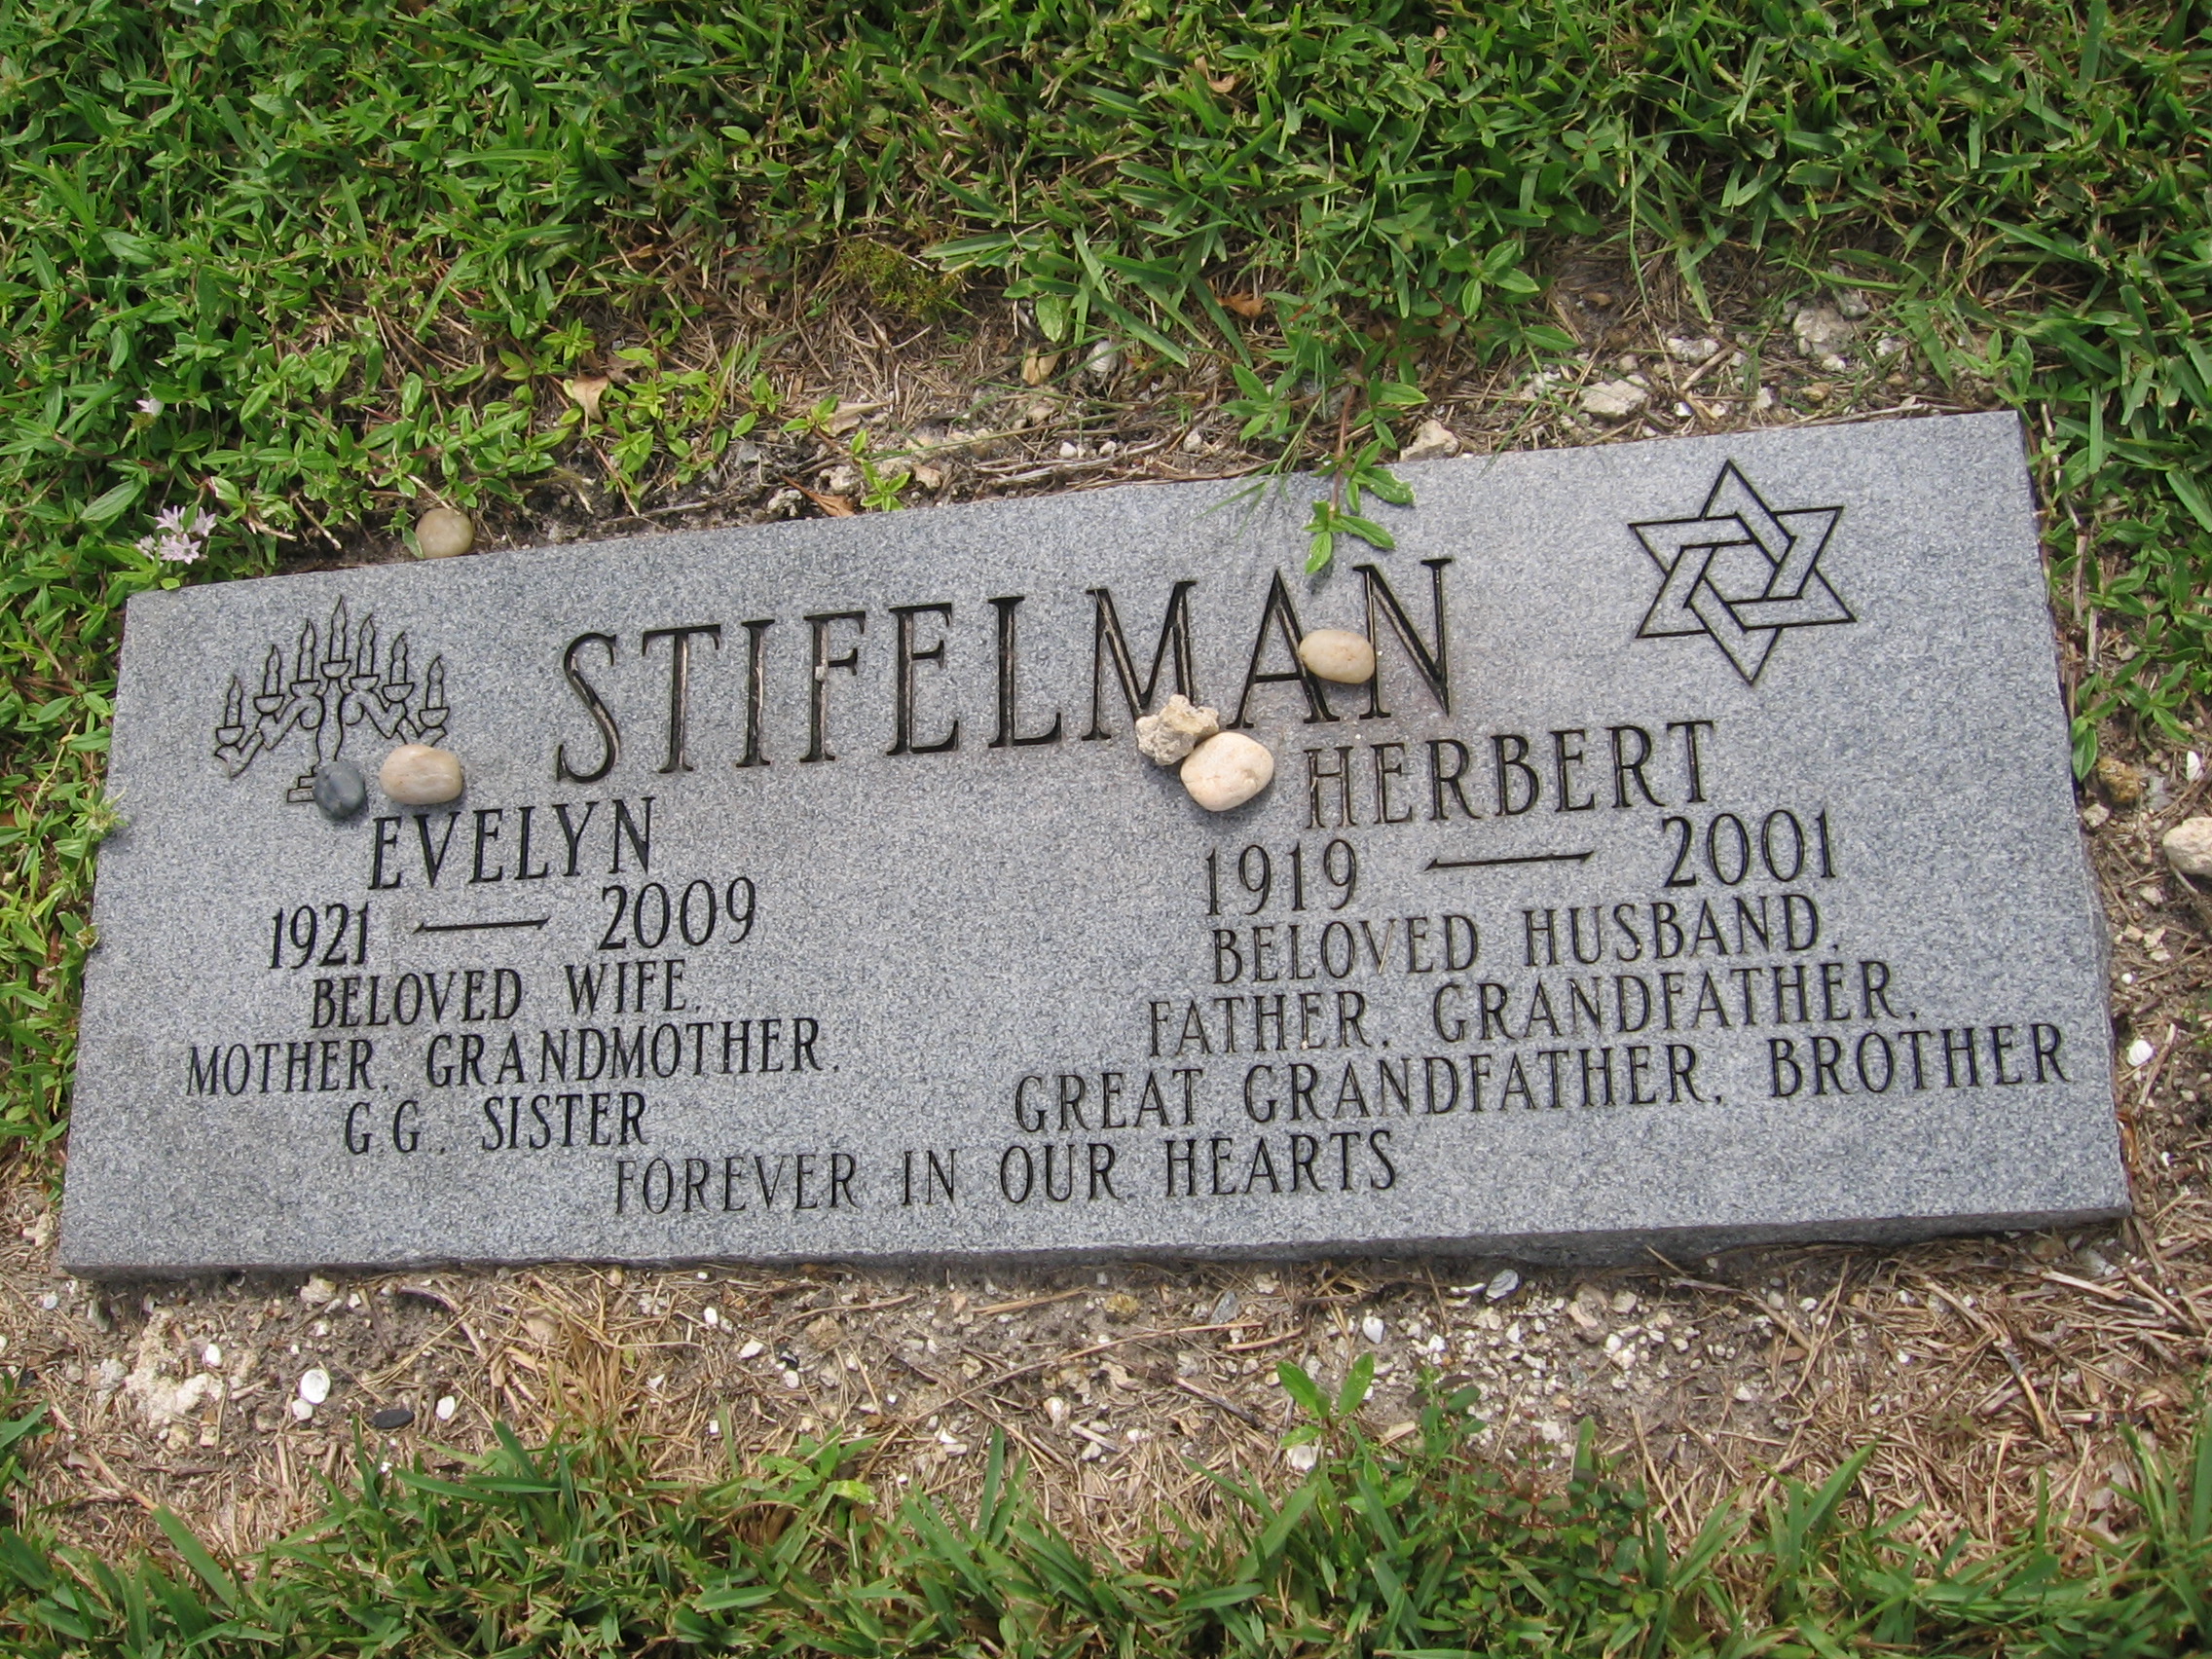 Herbert Stifelman